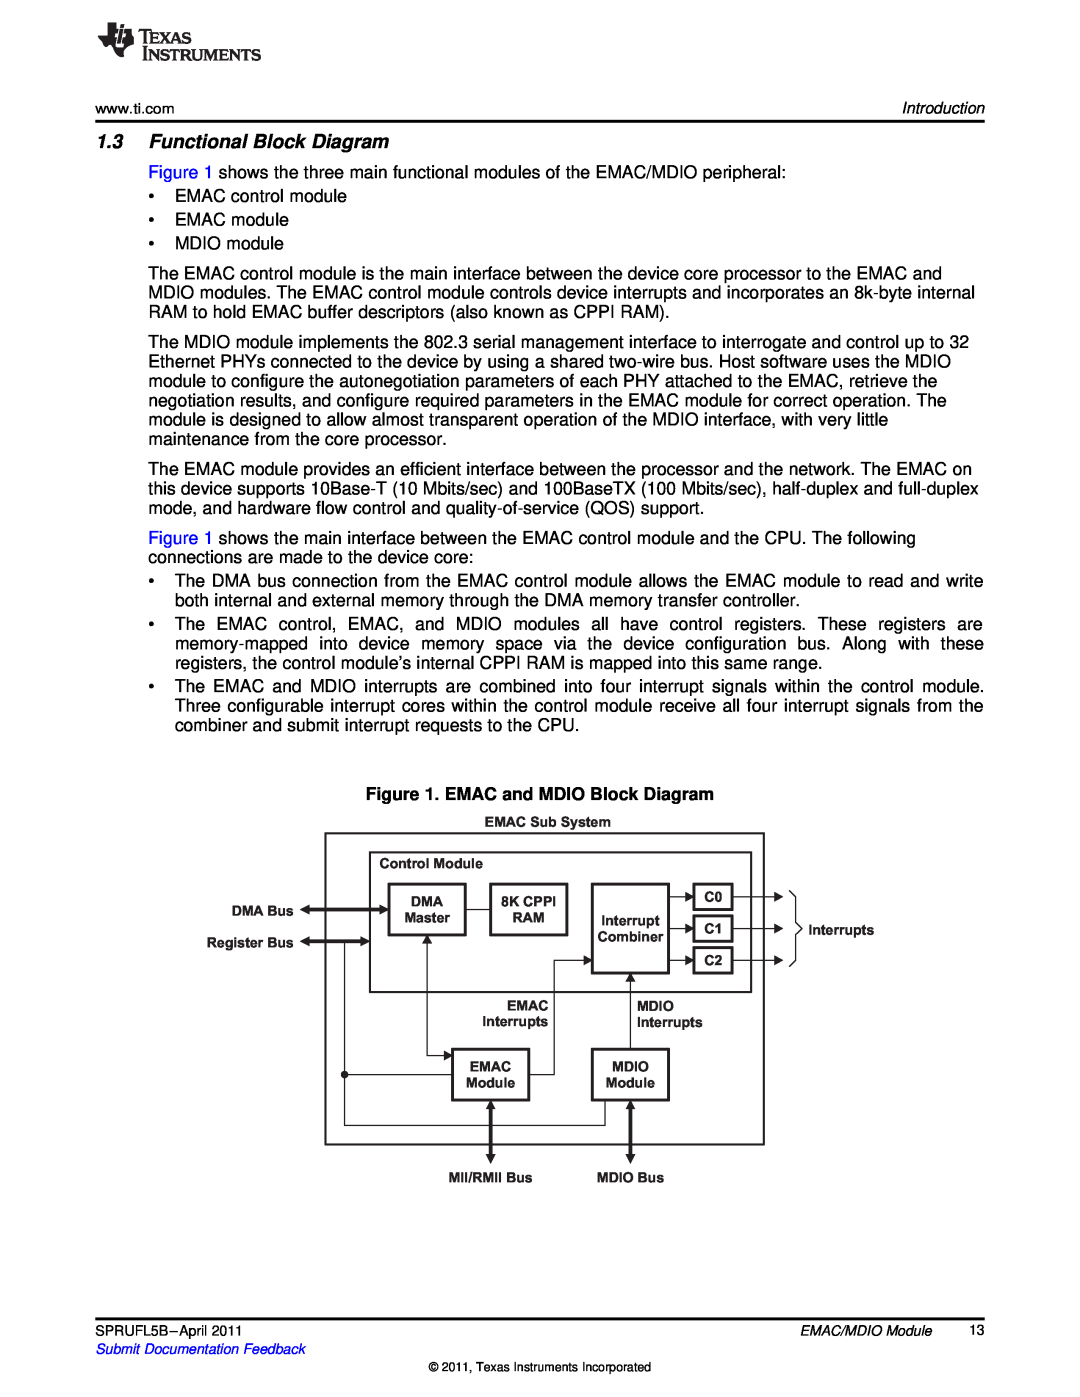 Texas Instruments TMS320C674X manual Functional Block Diagram, EMAC and MDIO Block Diagram 